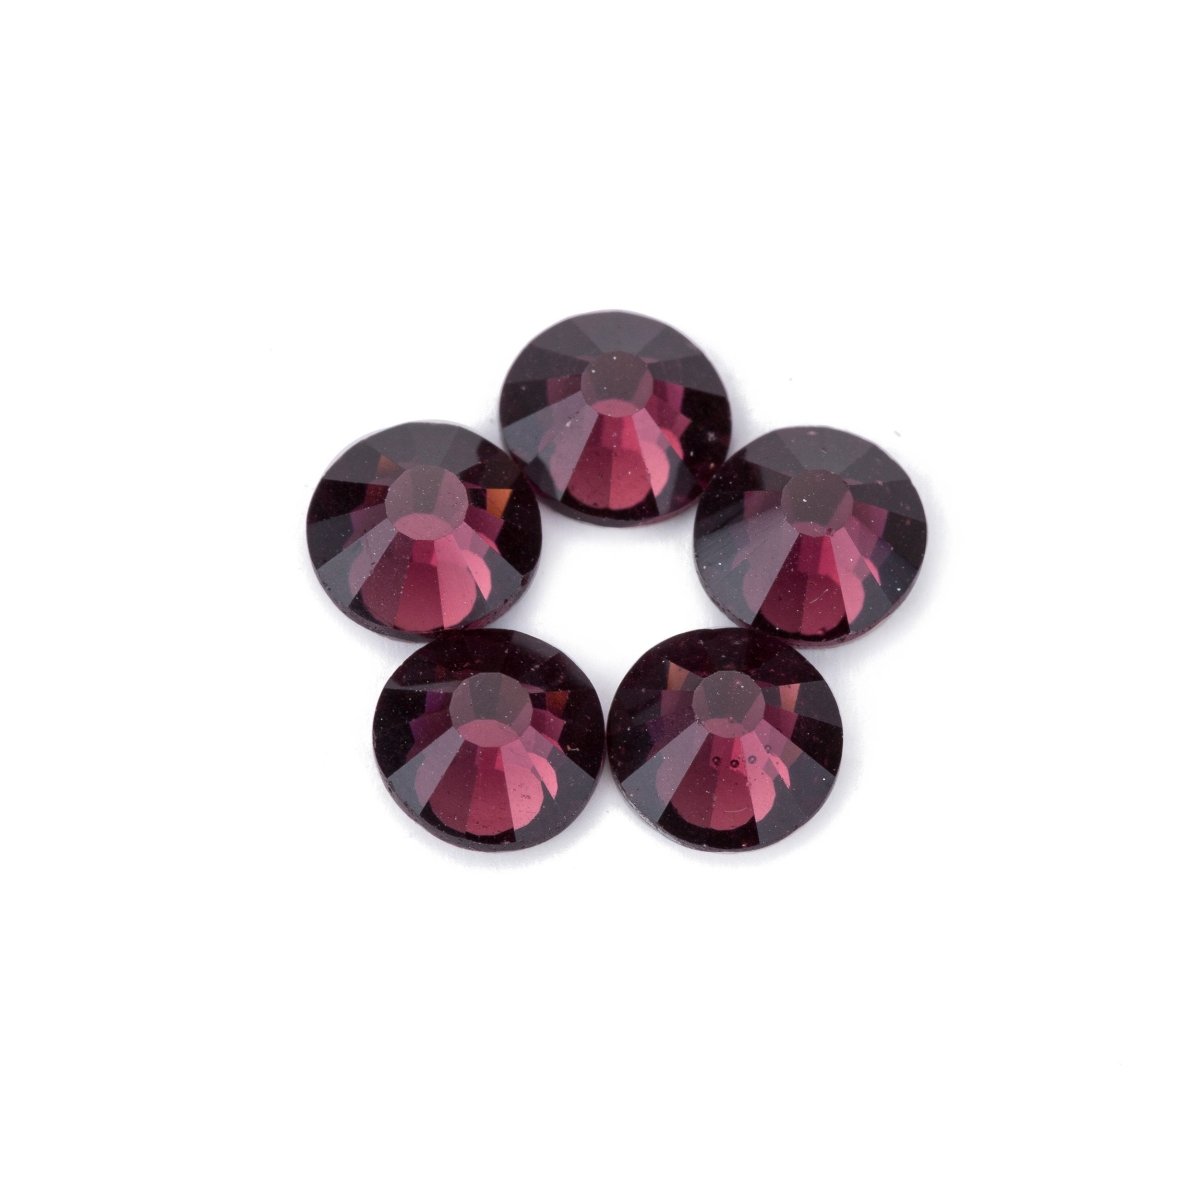 High Quality Crystal Dark Amethyst Dark Purple Rhinestones loose flat back No Hot Fix Size ss 10 / ss 12 / ss 16 / ss 20 / ss 30 /ss 34 - DLUXCA